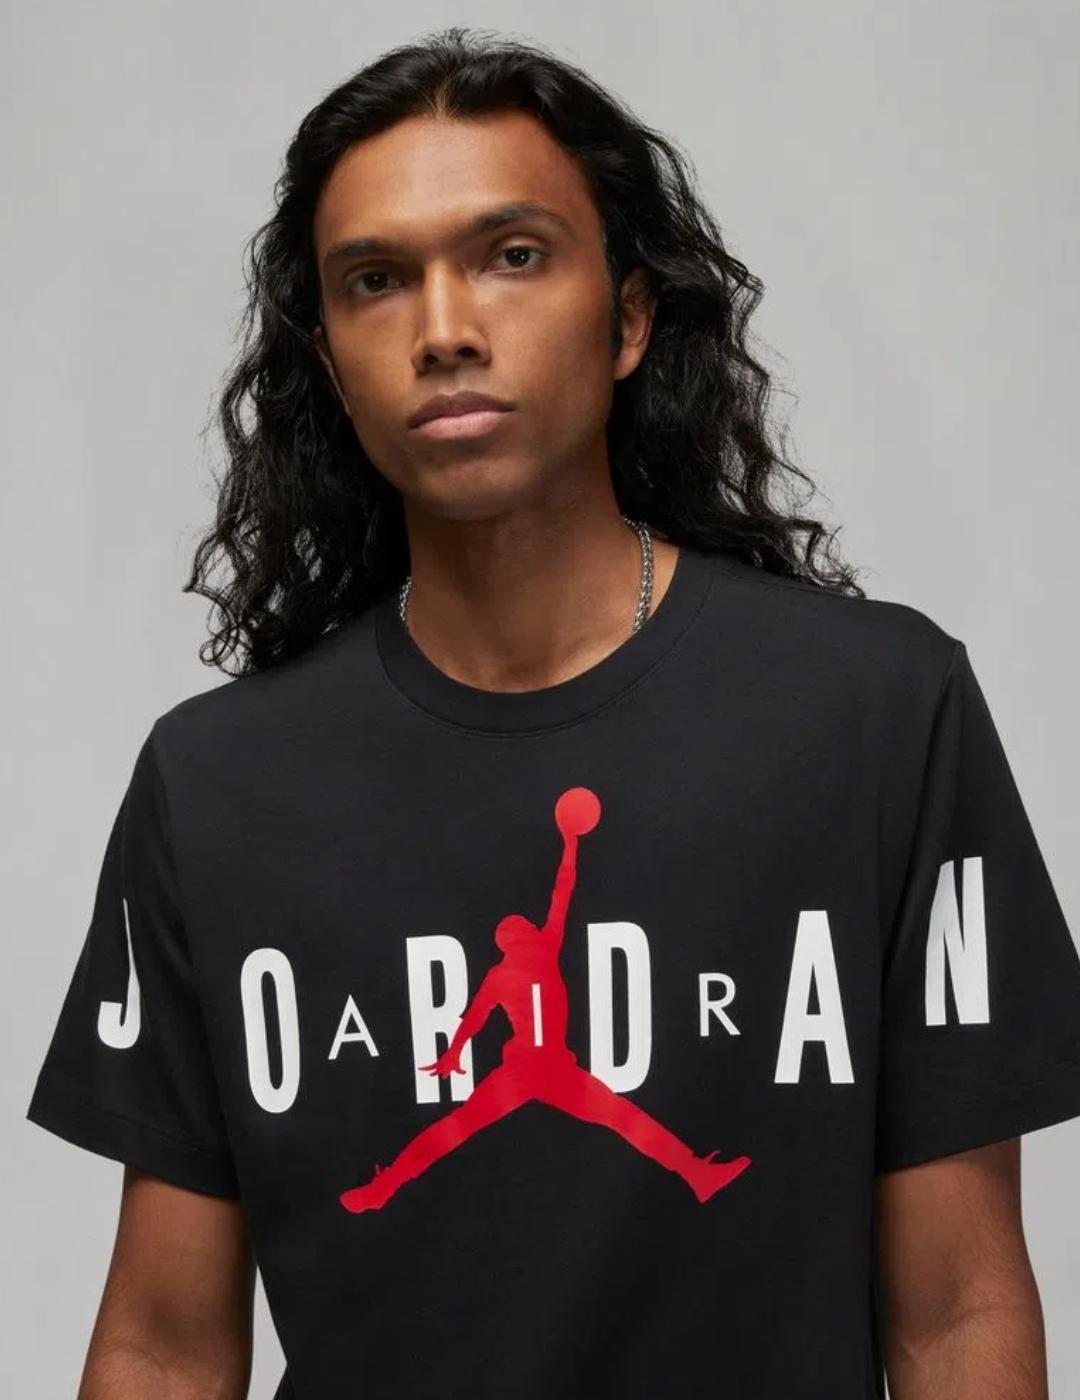 Camiseta Jordan negra logo grande para hombre